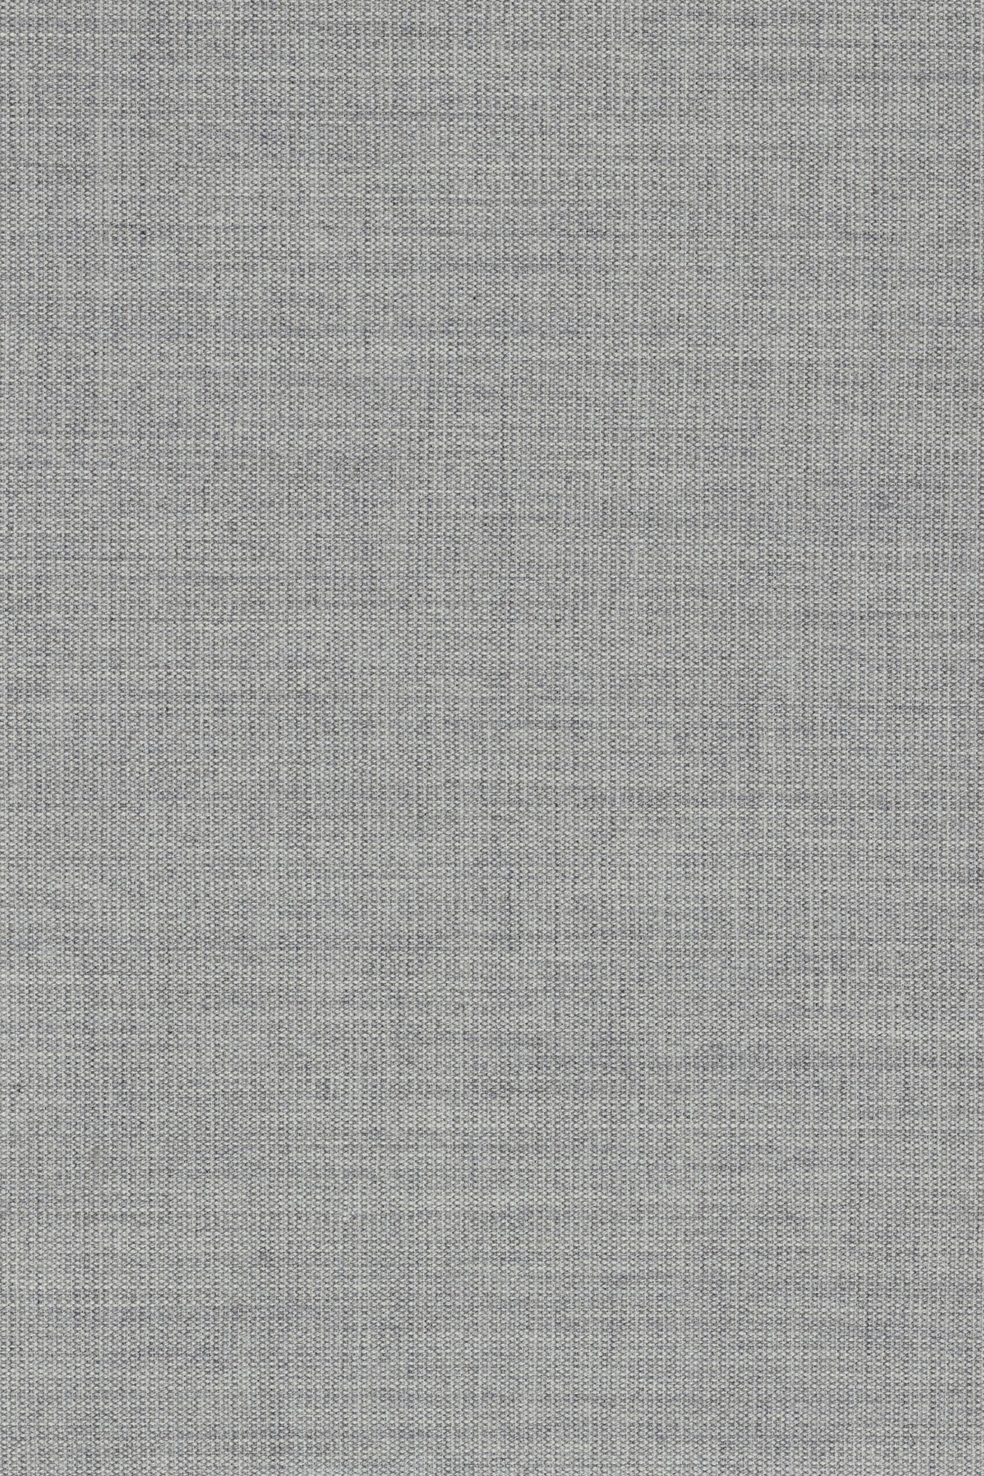 Fabric sample Canvas 2 124 grey